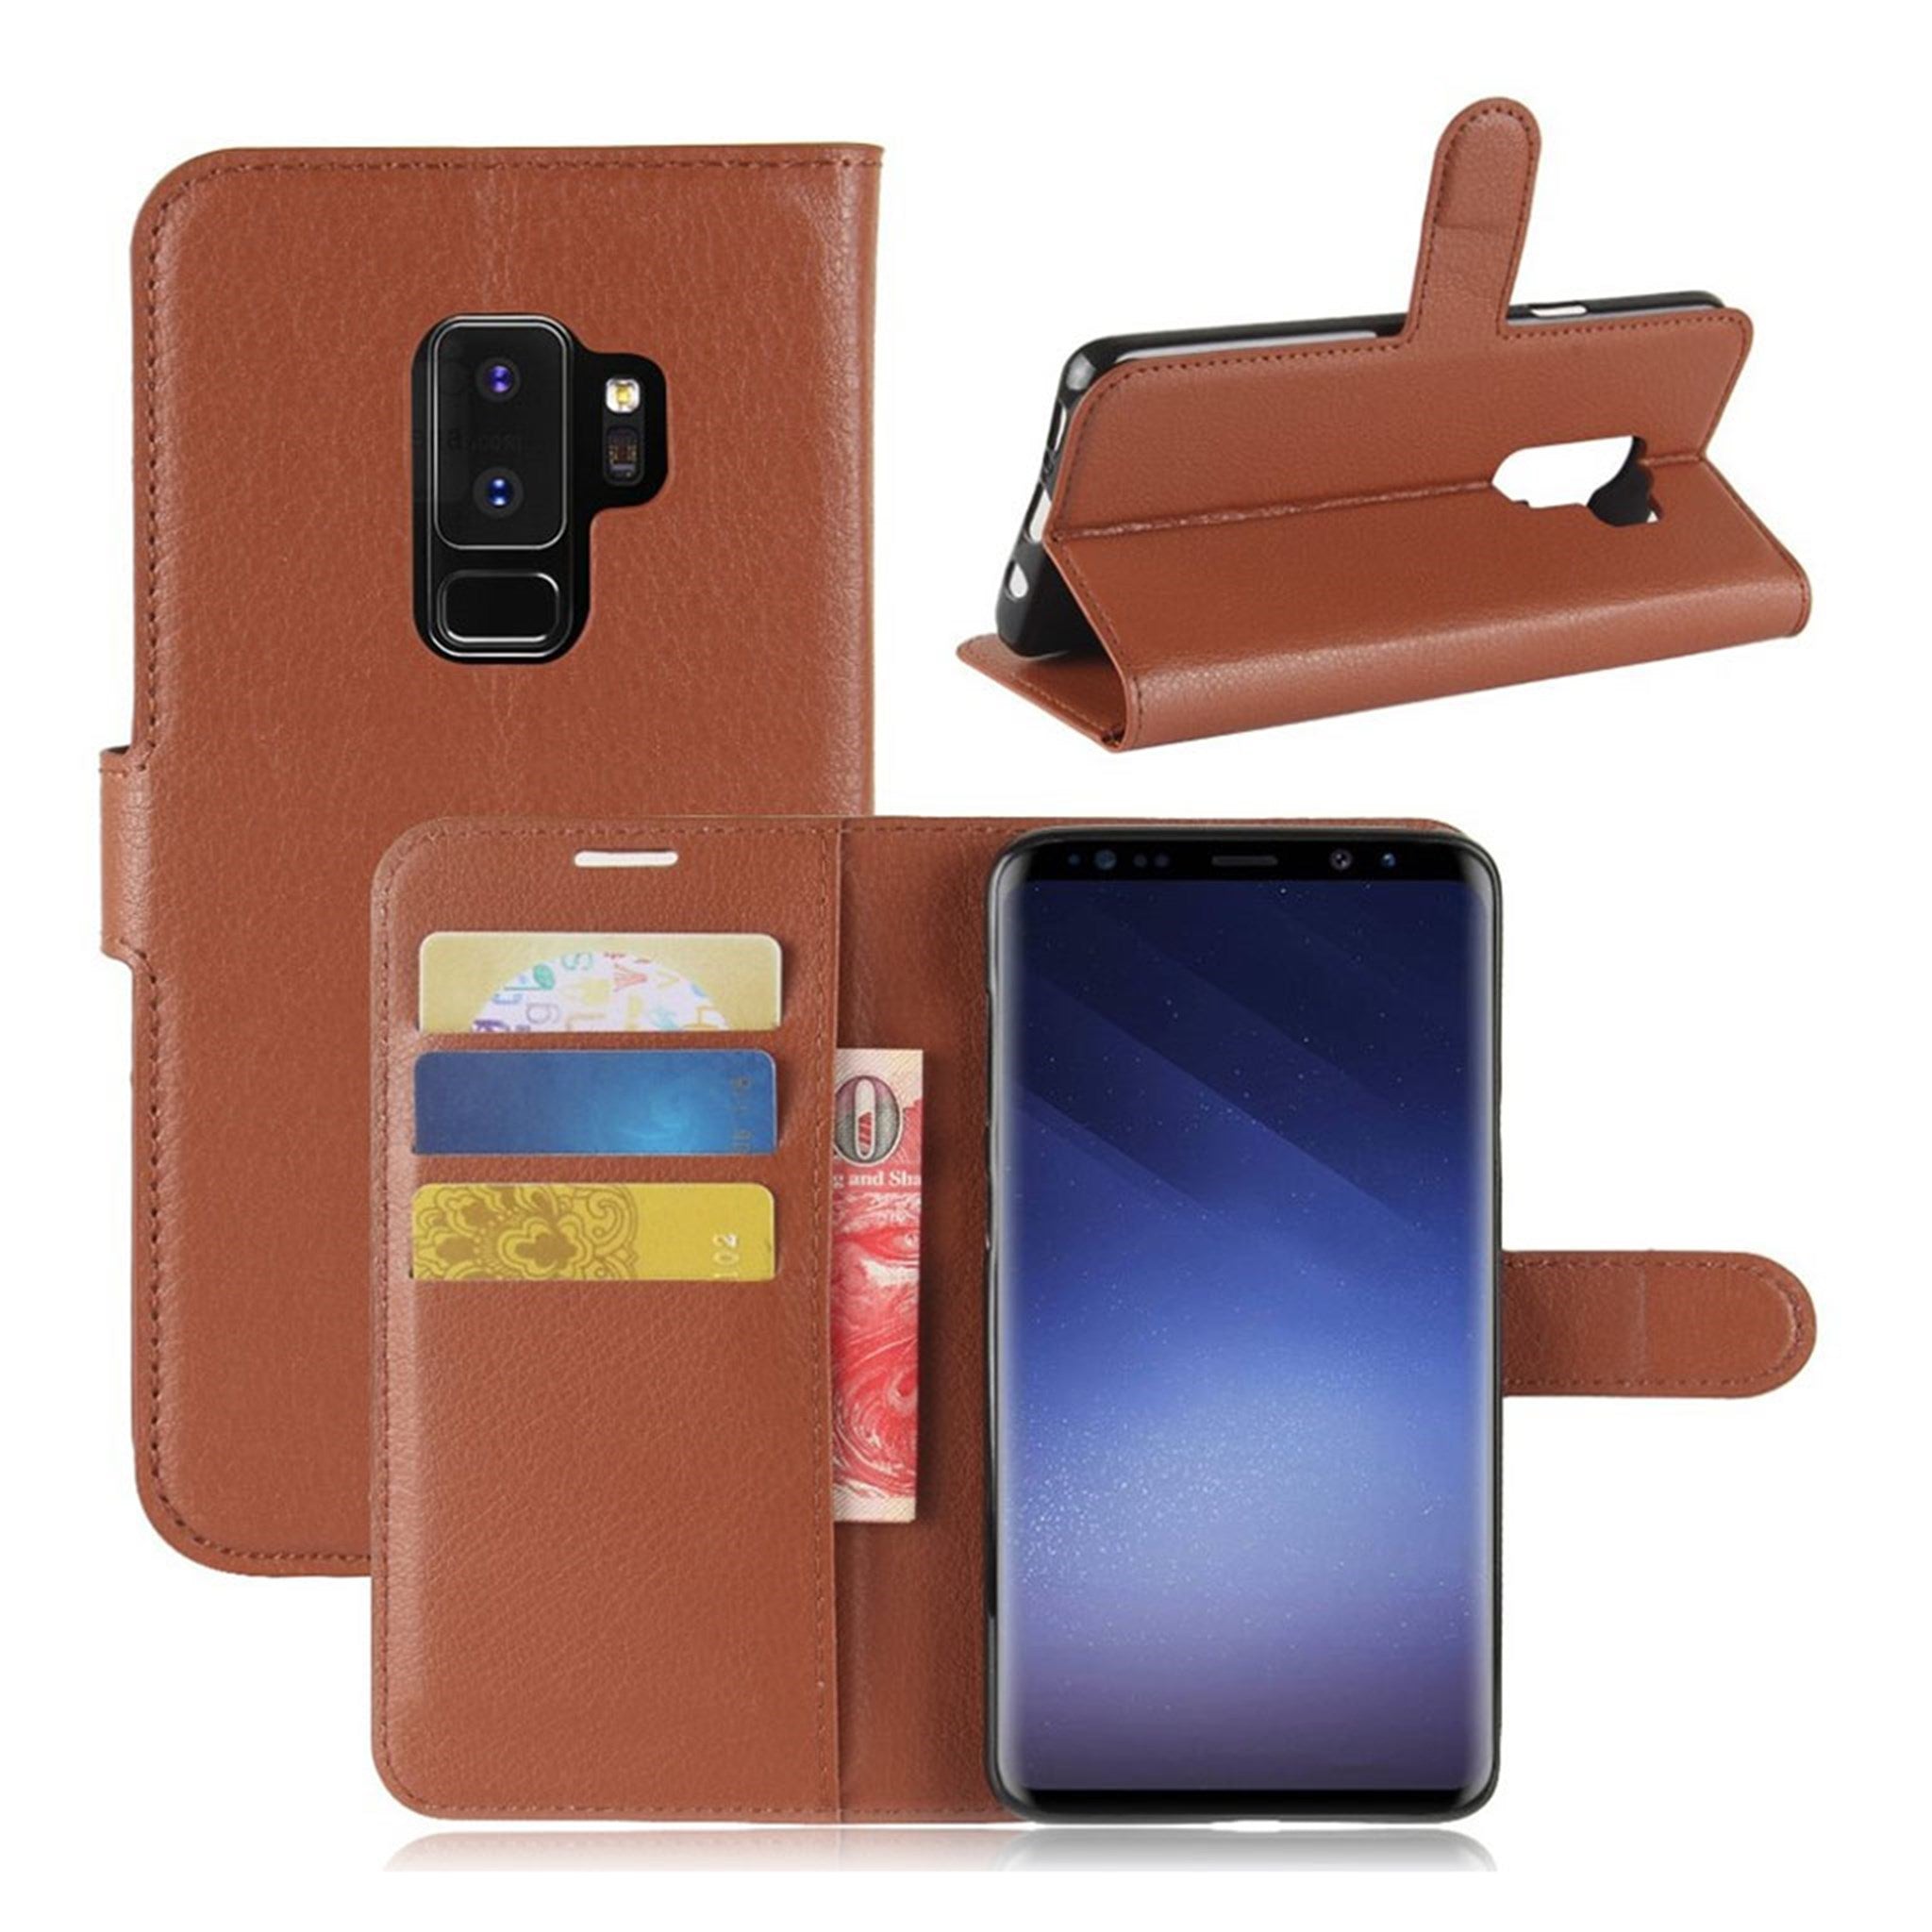 Samsung Galaxy S9 Plus litchi skin leather case - Brown